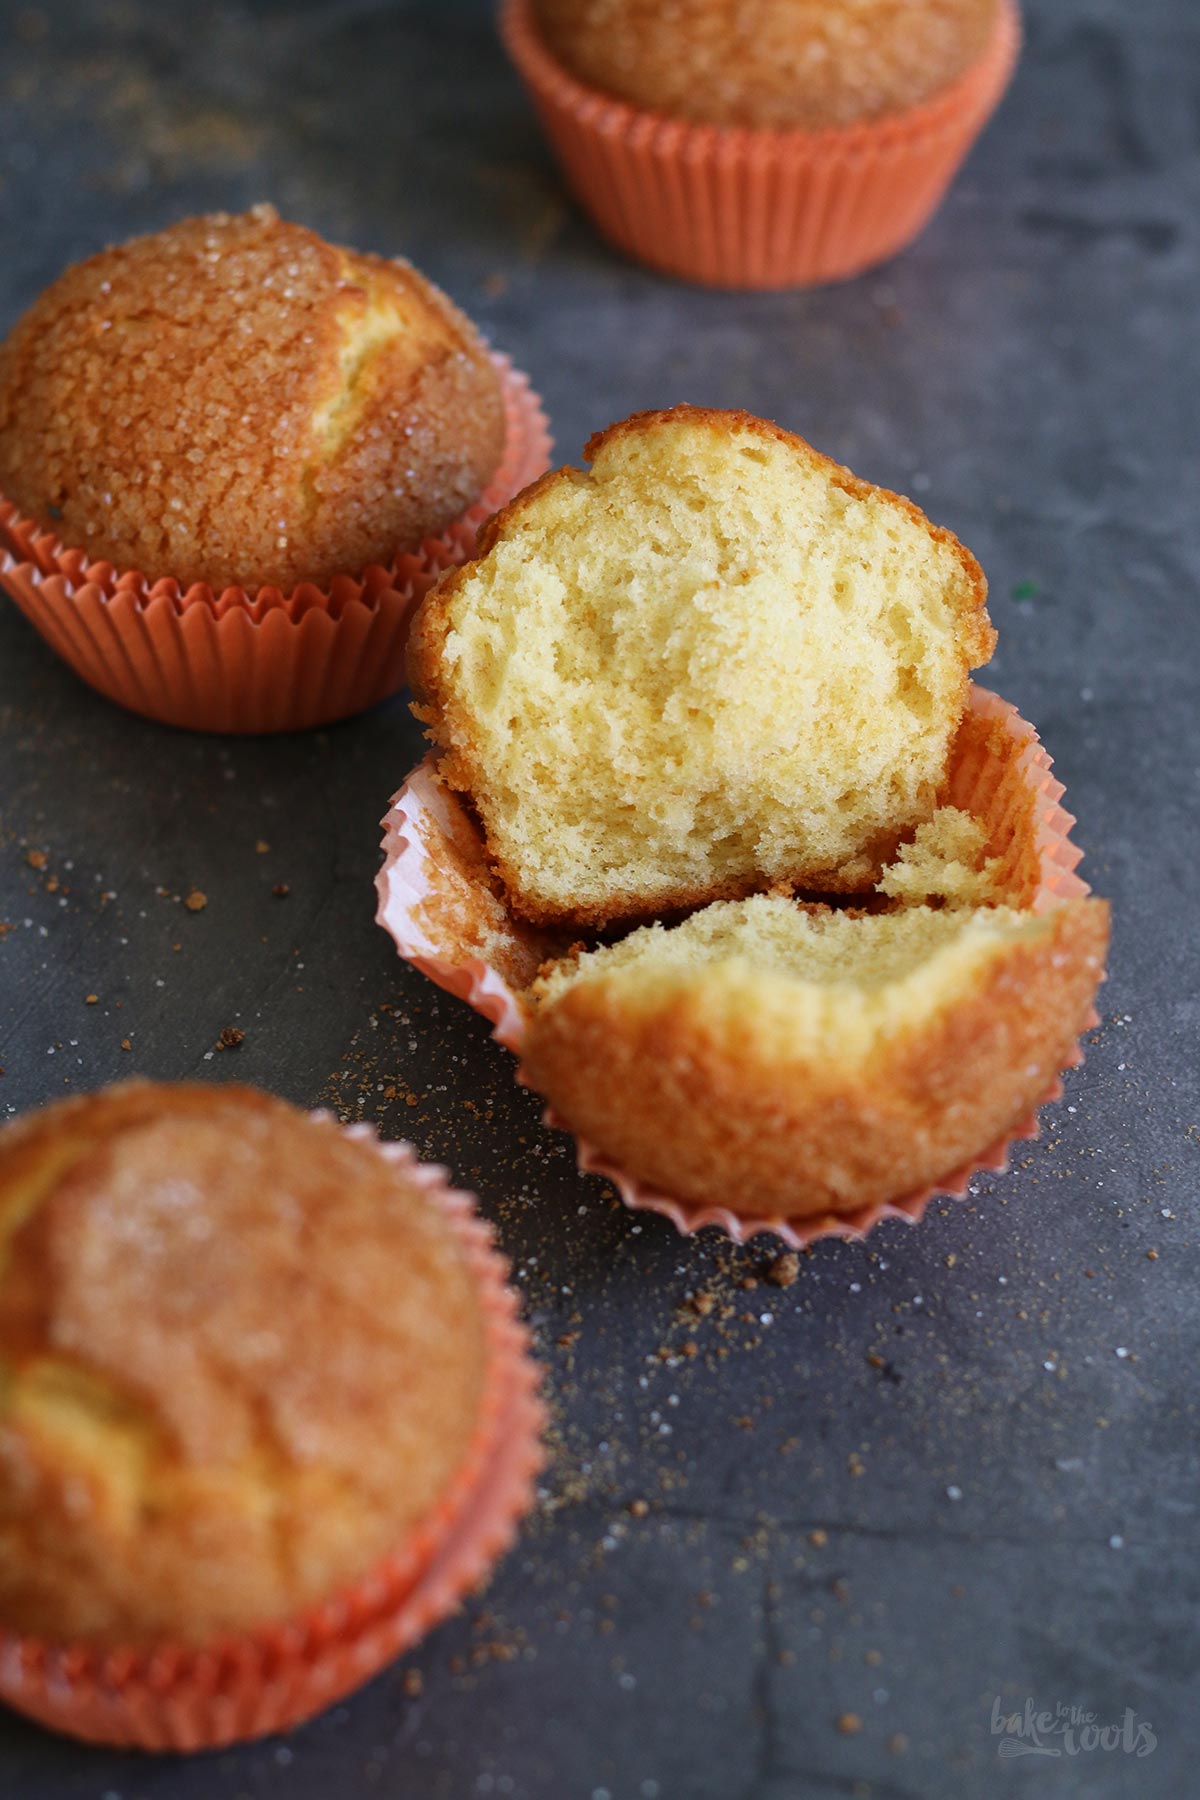 Einfache Magdalenas – Spanische Muffins | Bake to the roots